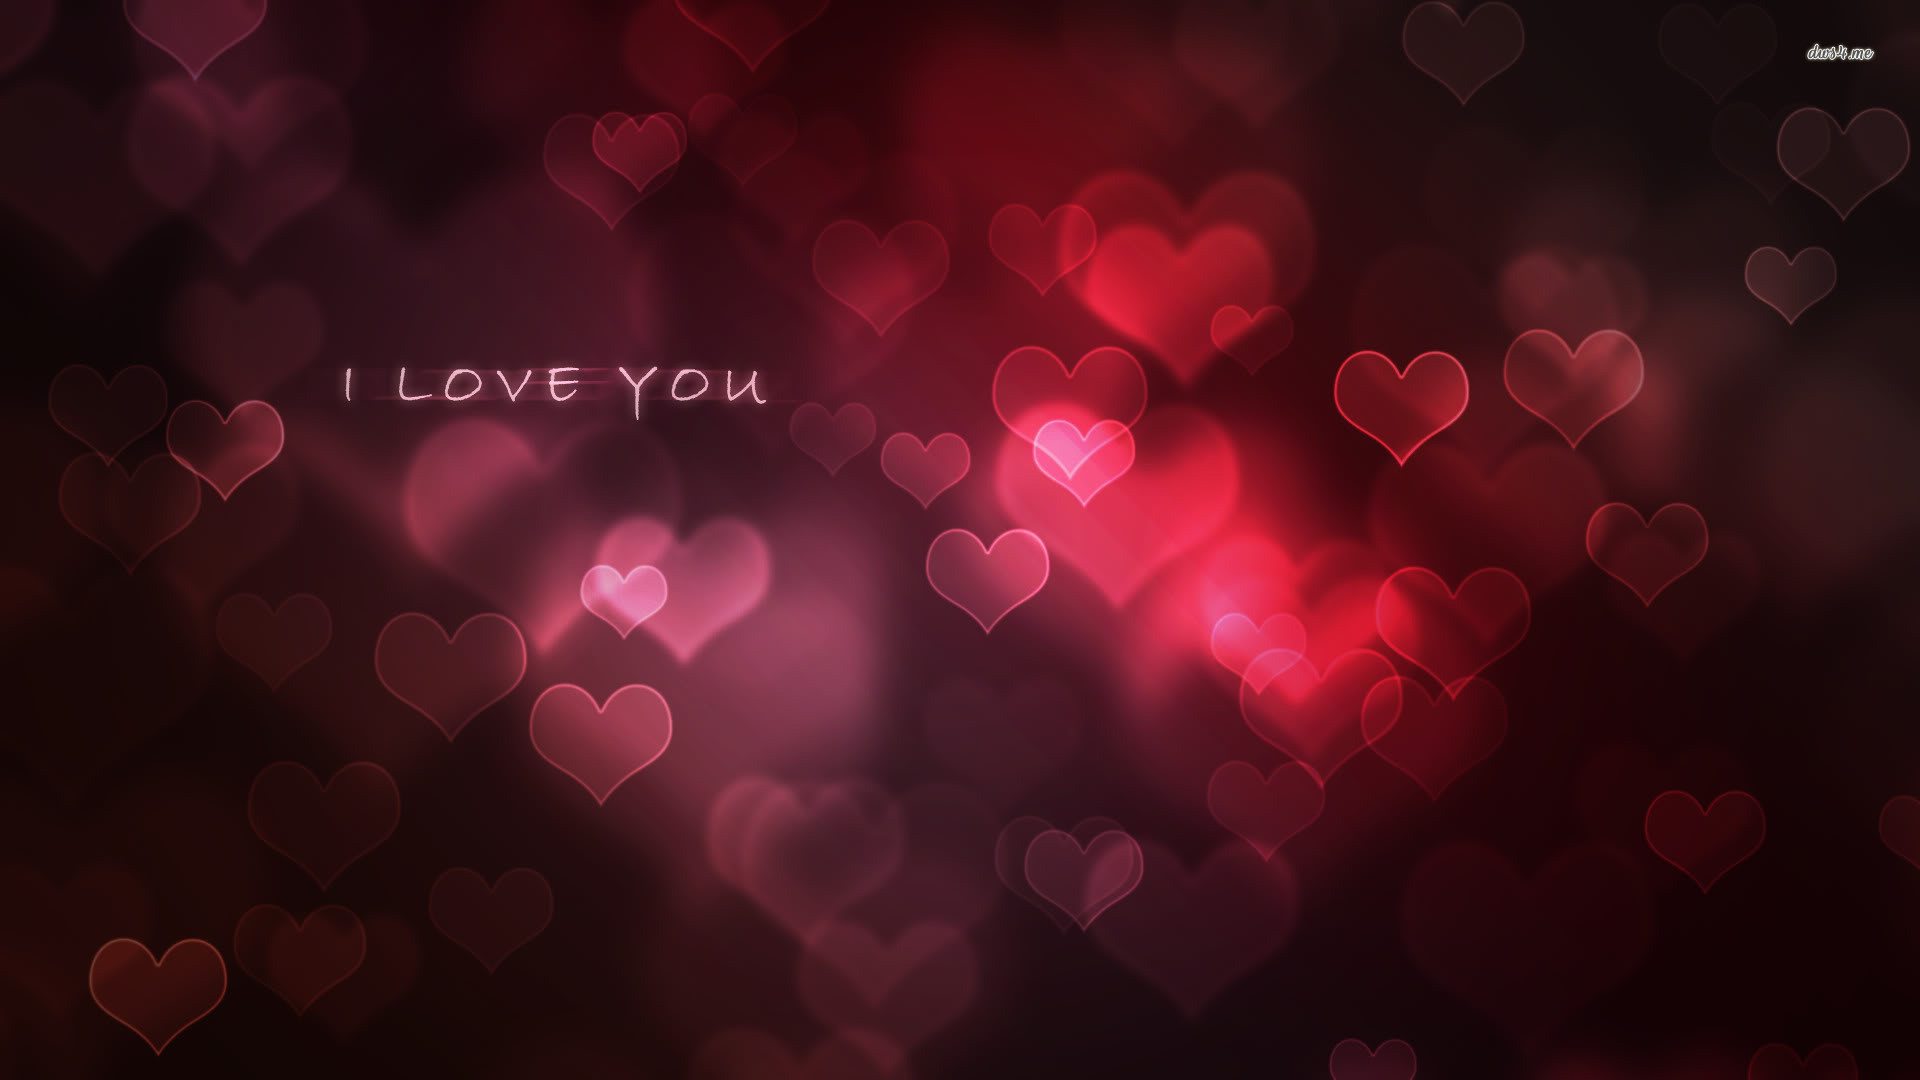 Fantastic Animated Hearts Wallpaper Te Love Heart Wallpapers Hd Wallpaper 1920x1080 1920x1080